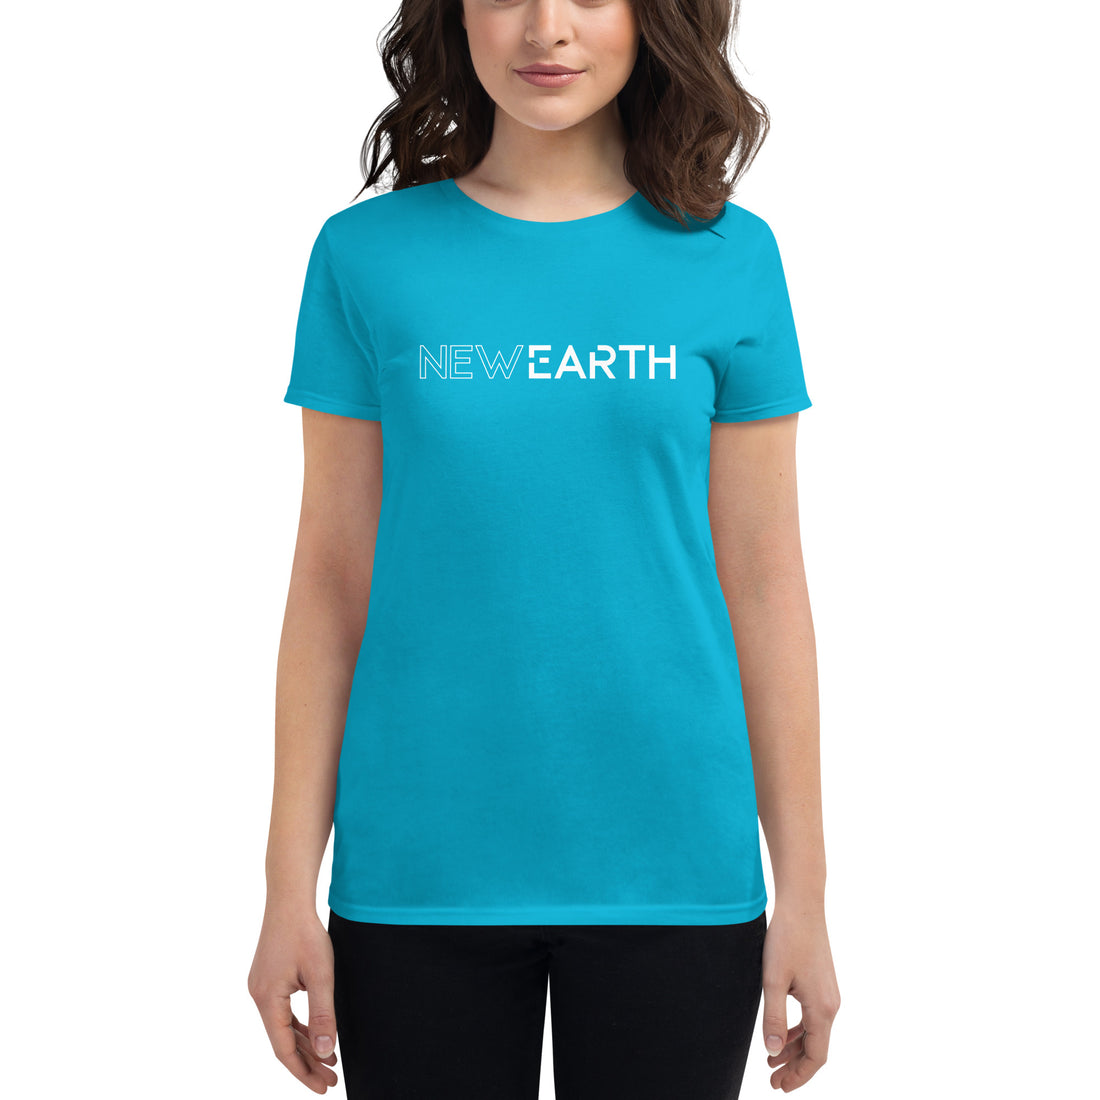 New Earth - Women's T-shirt